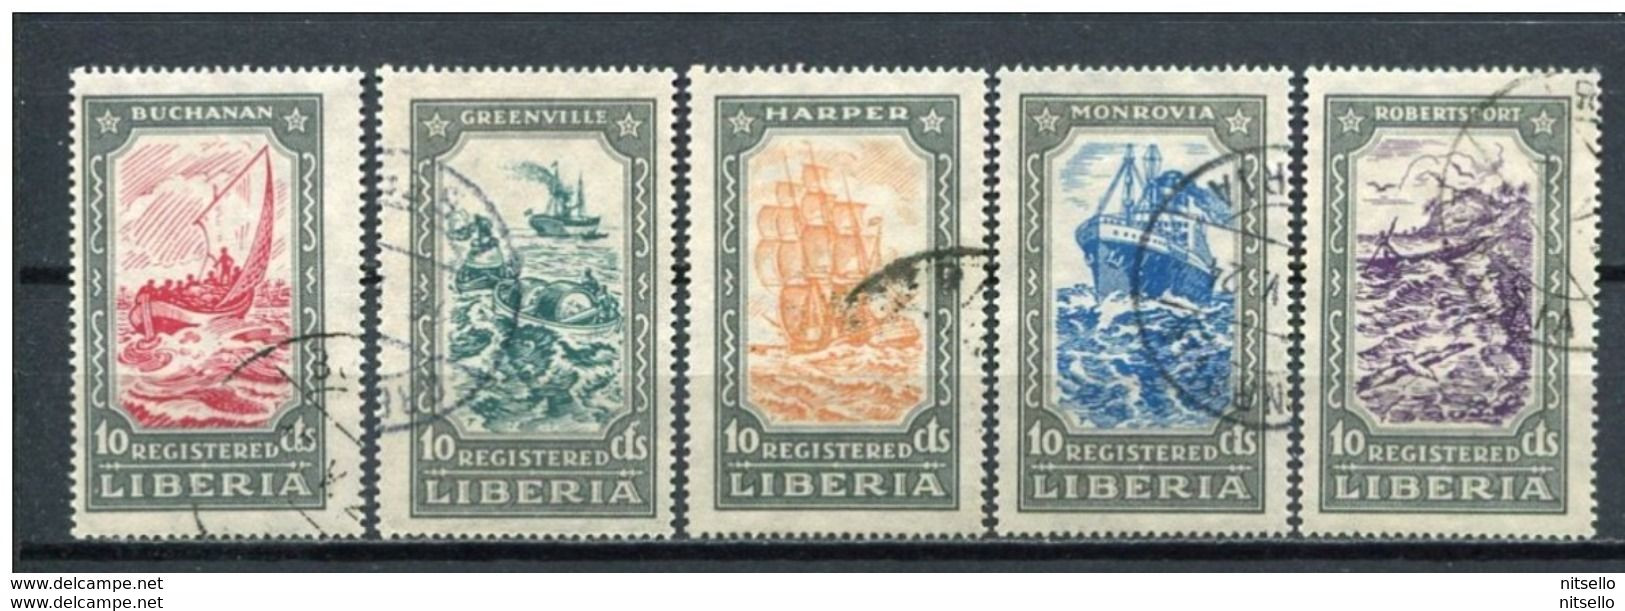 LOTE 1875-2   ///  (C060) LIBERIA YVERT Nº: 246/50  ¡¡¡ OFERTA - LIQUIDATION - JE LIQUIDE !!! - Liberia